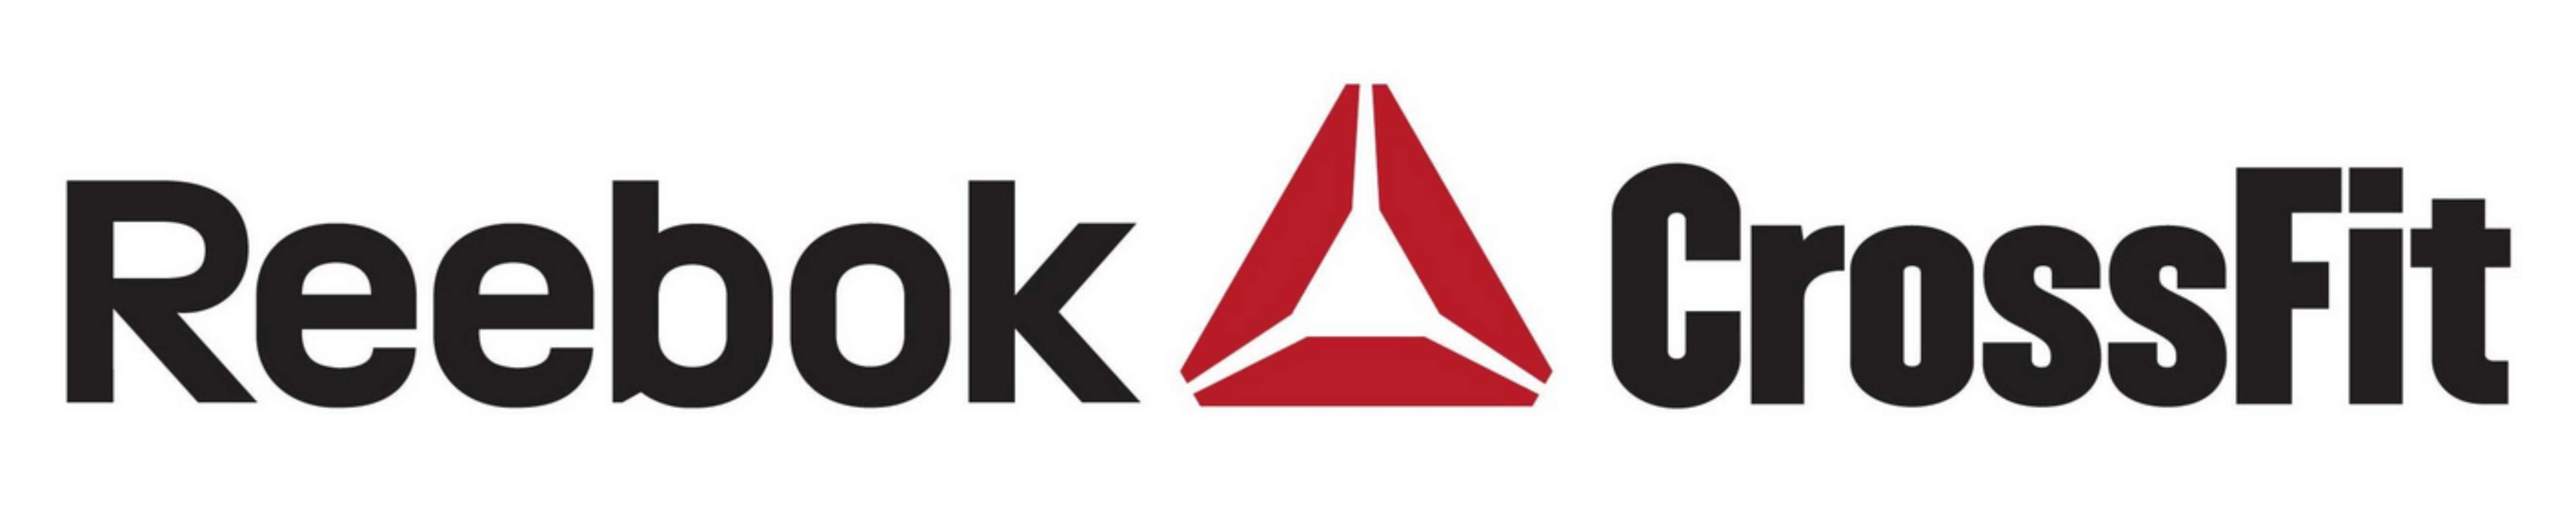 Reebok CrossFit Triangle Logo - reebok crossfit triangle logo